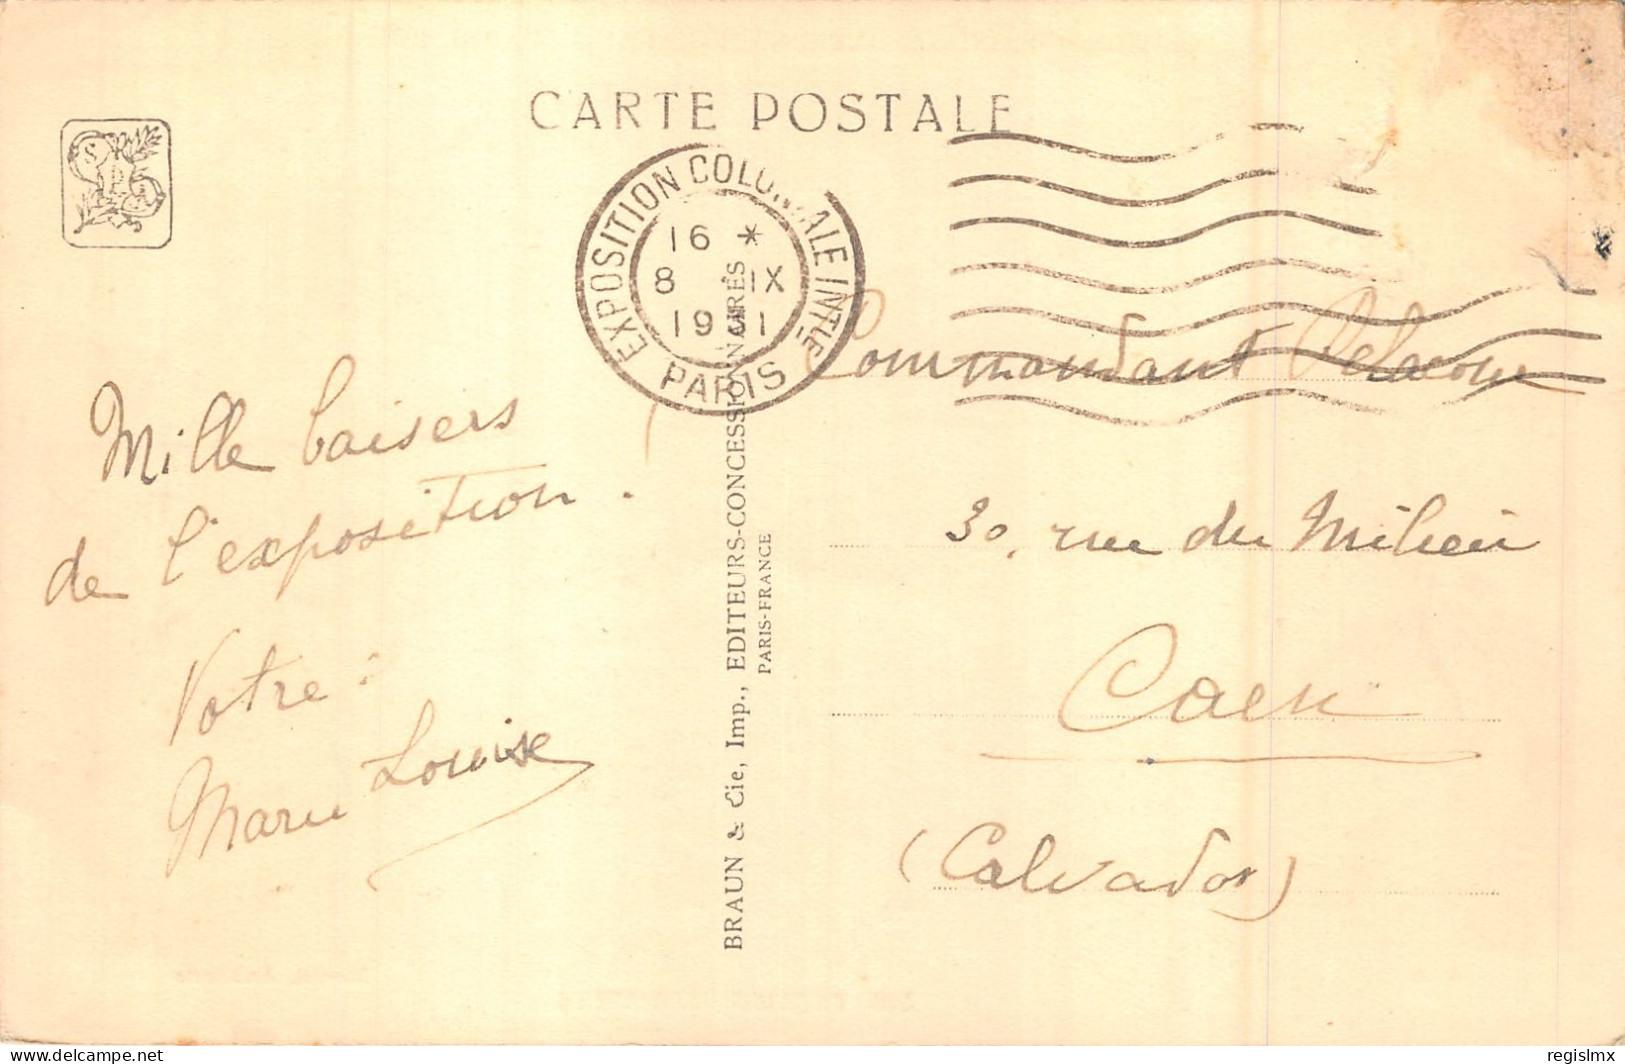 75-PARIS-EXPOSITION COLONIALE INTERNATIONALE 1931-N°T2408-H/0287 - Expositions